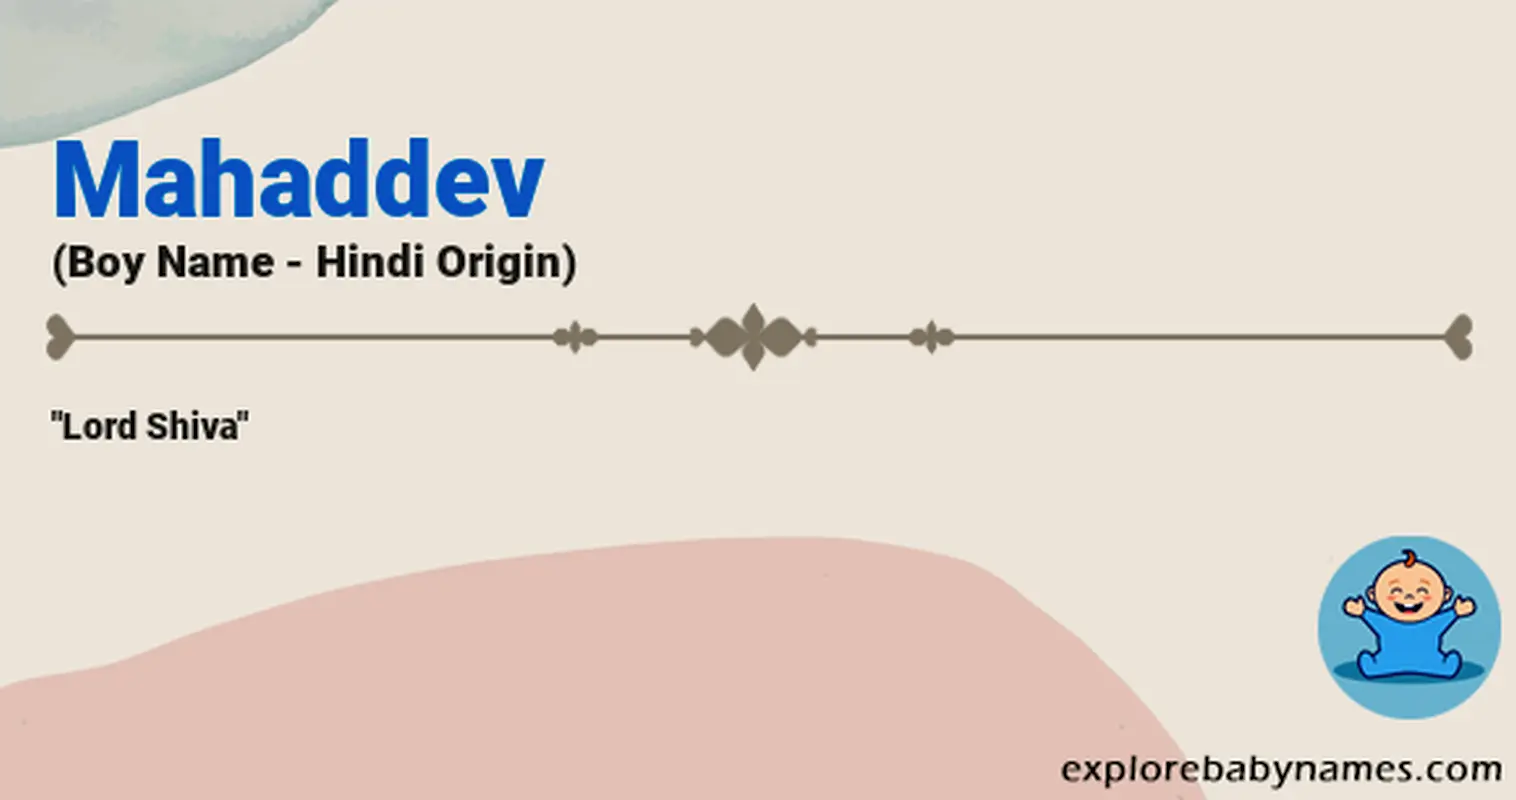 Meaning of Mahaddev